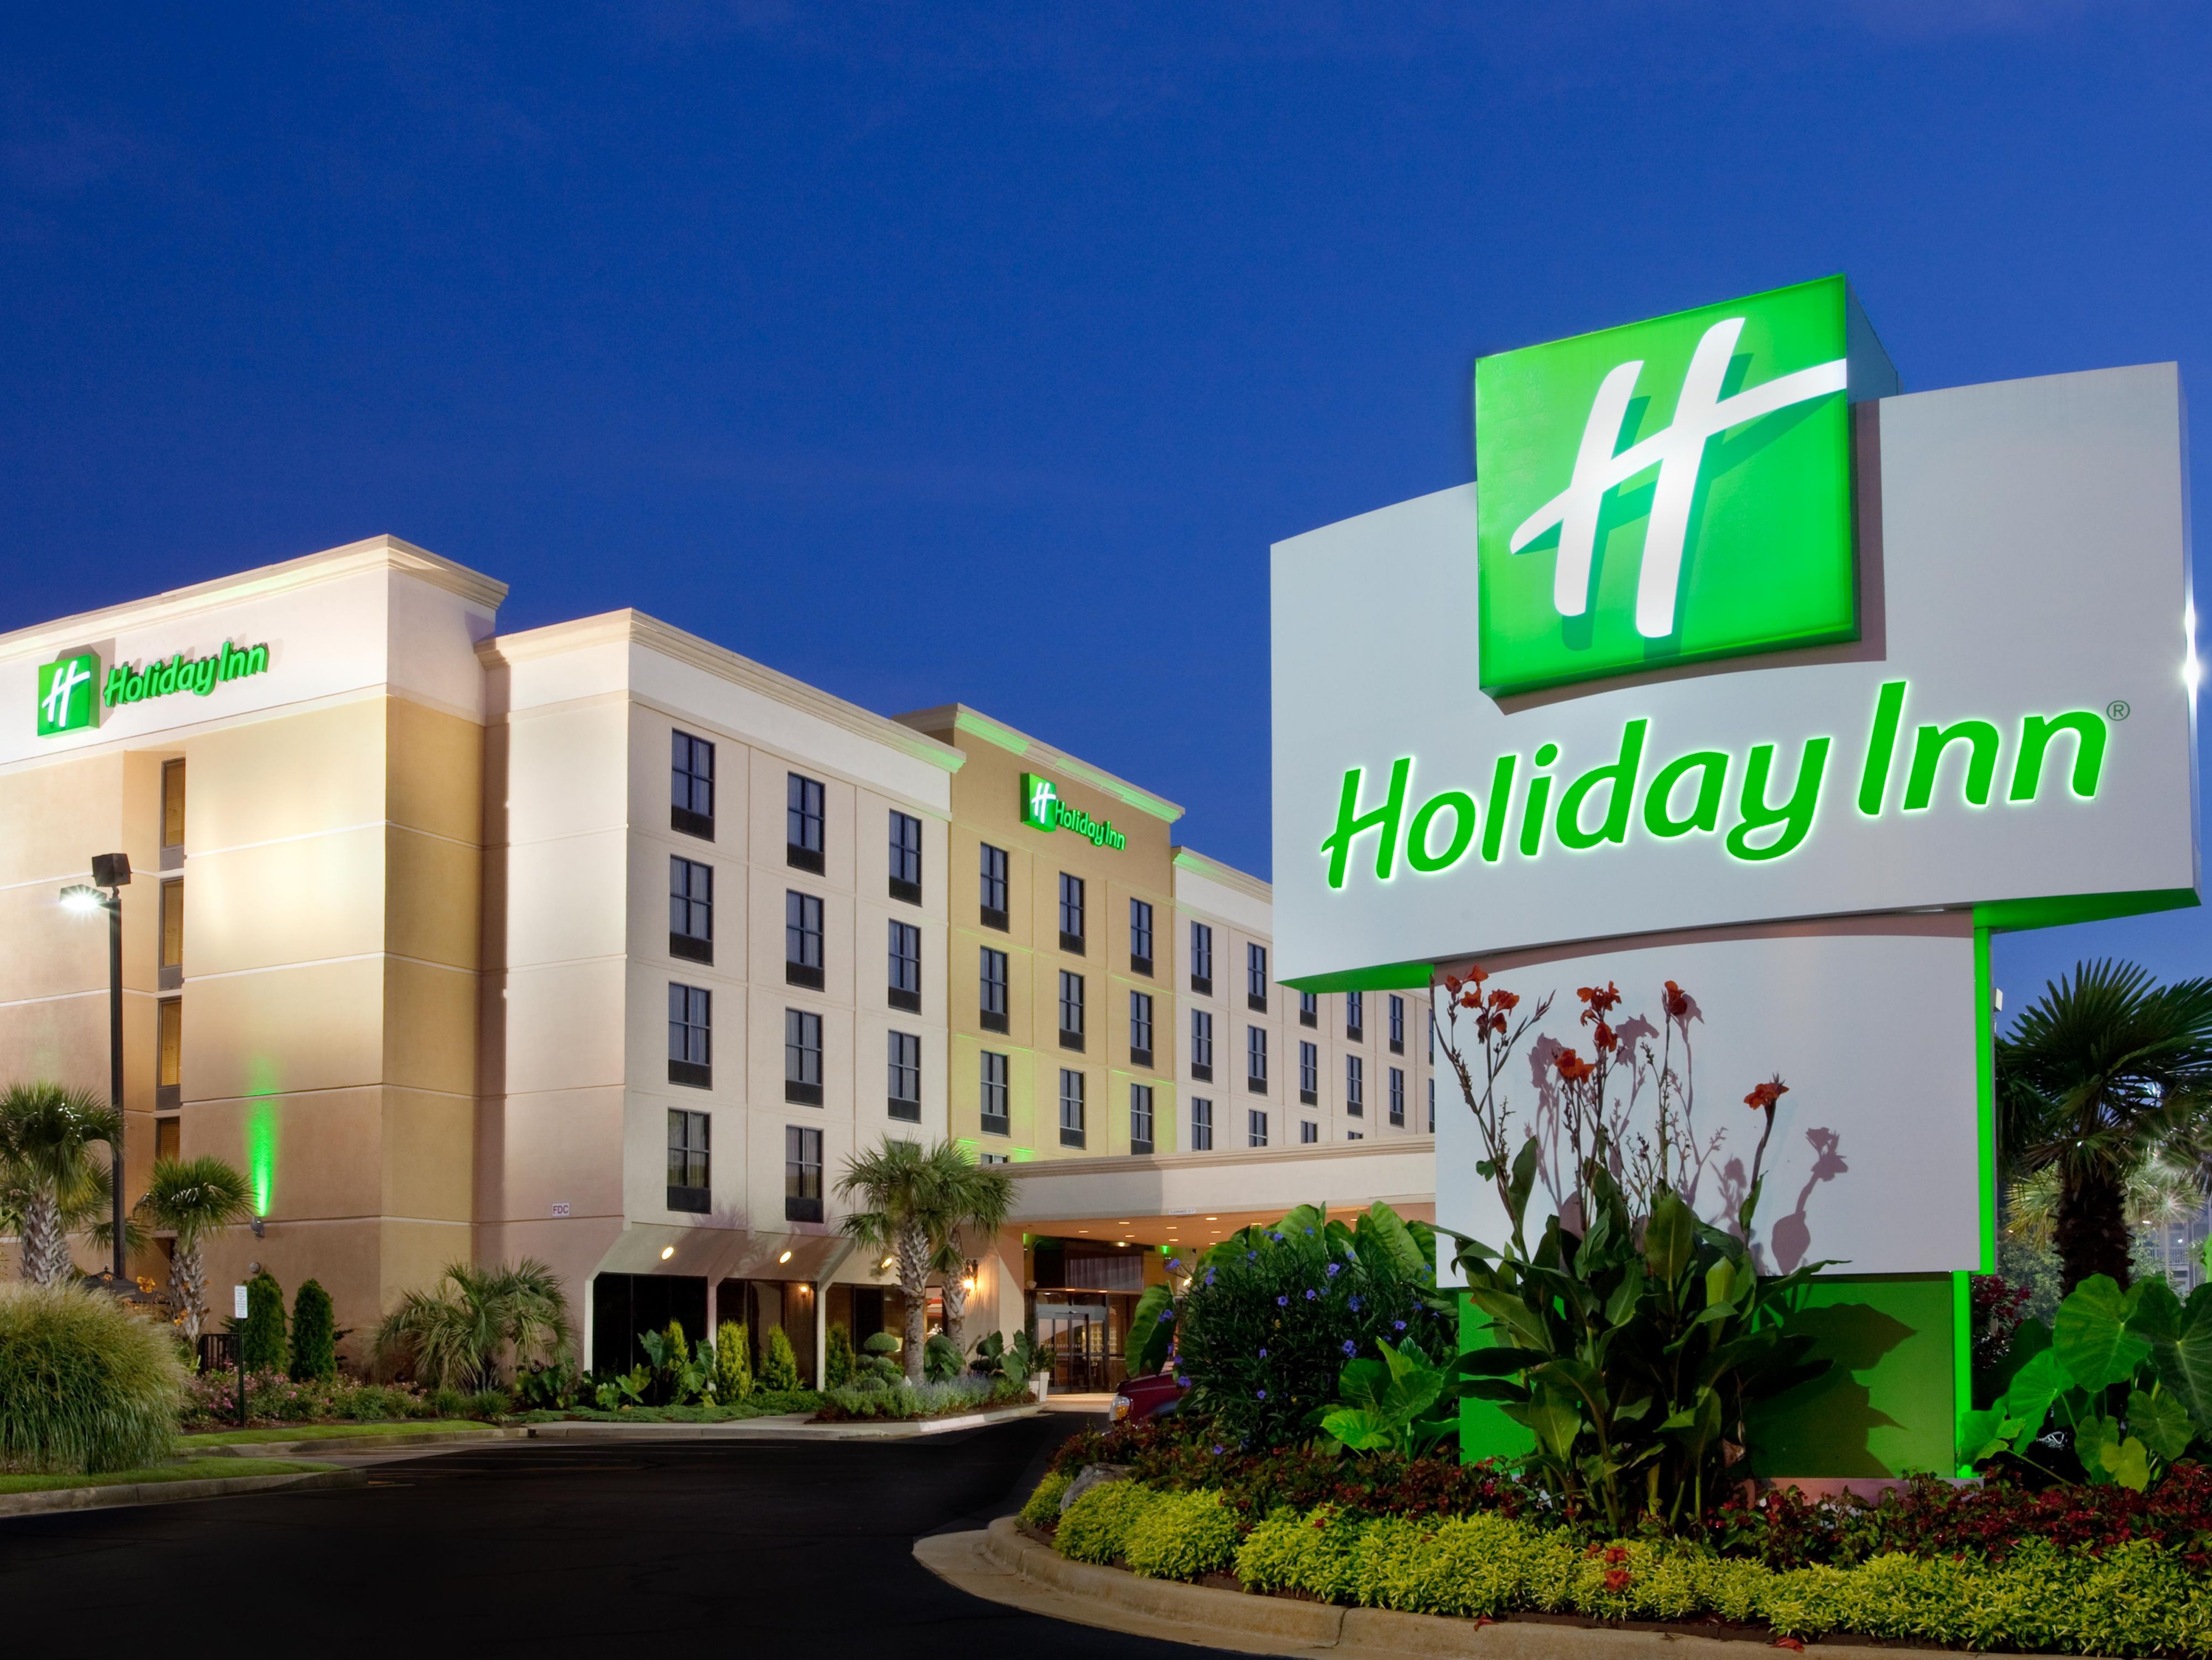 Holiday Inn Atlanta 3941382587 4x3